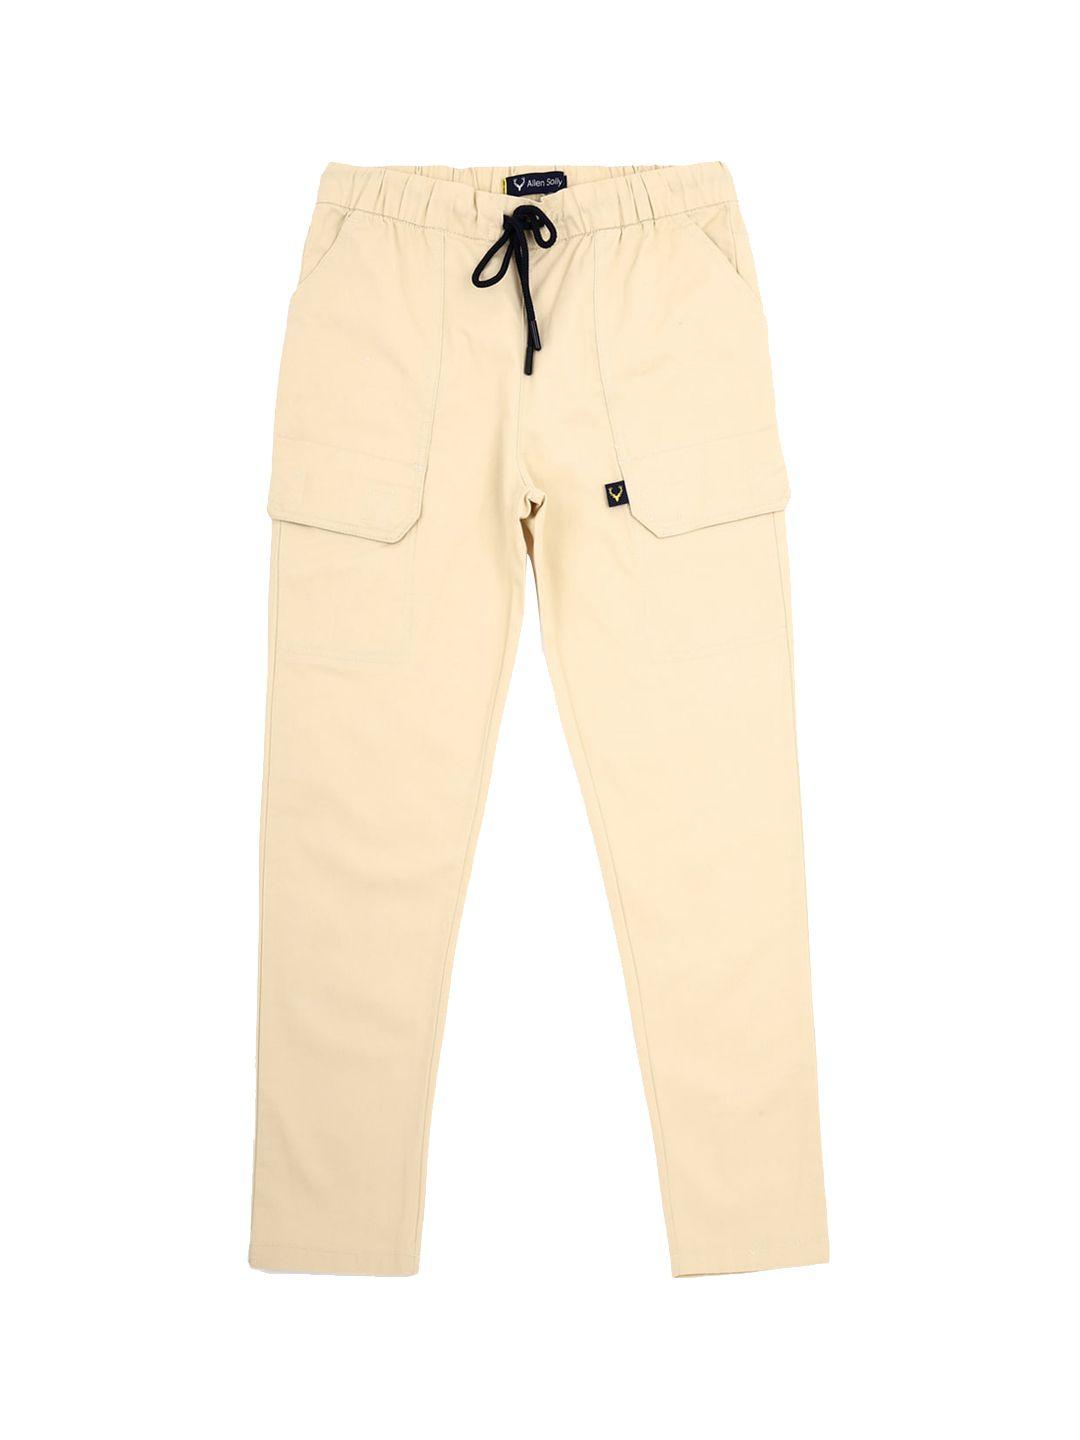 allen solly junior boys cream-coloured trousers